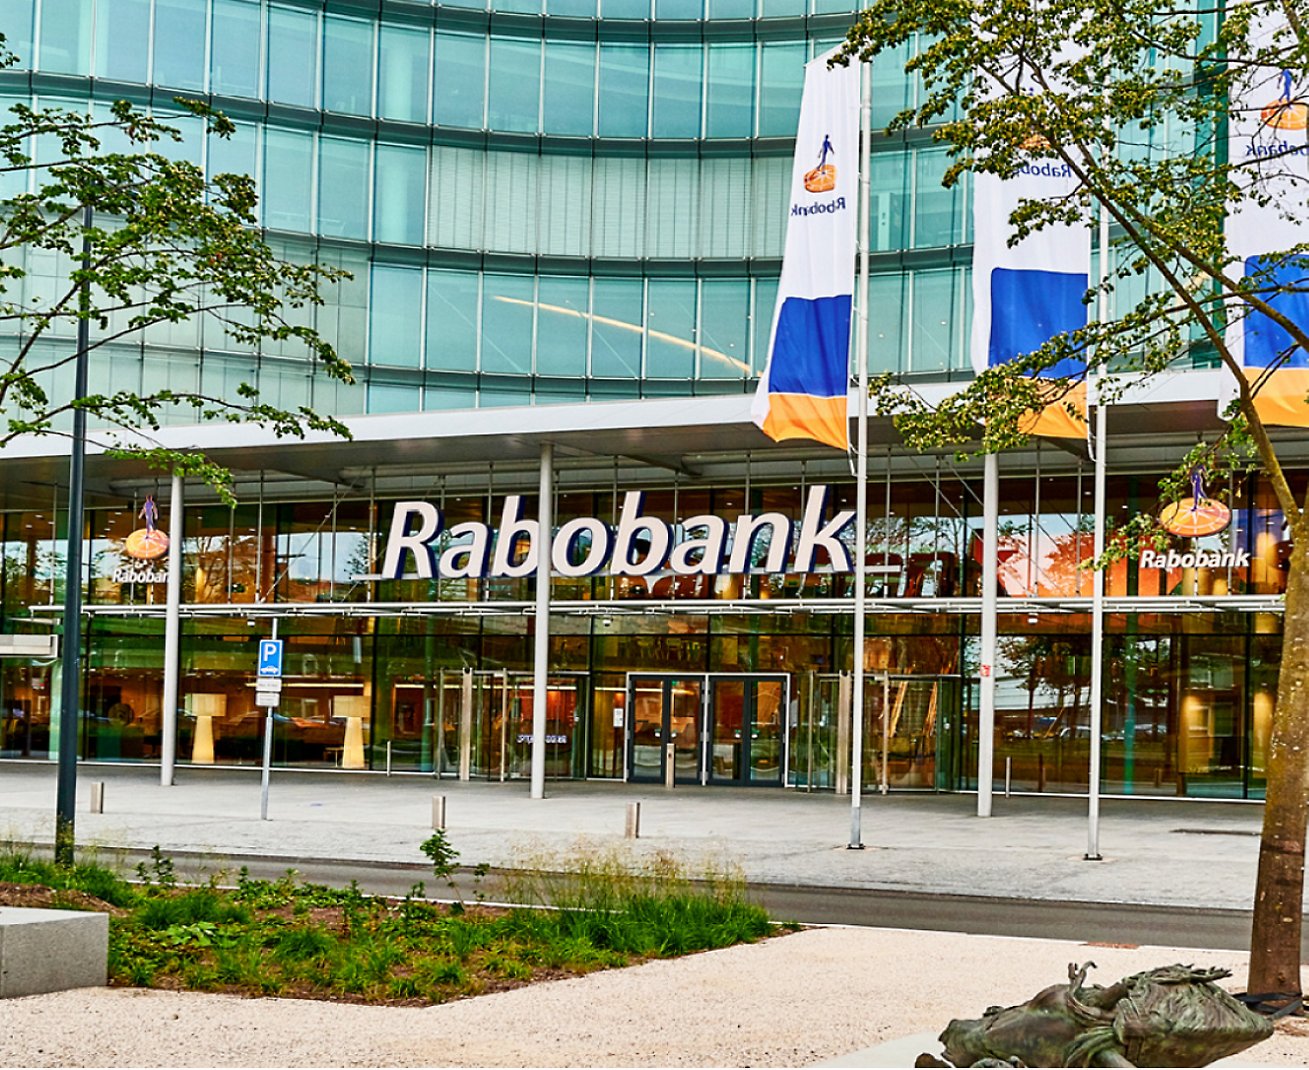 Rabobank라는 간판이 있는 건물.